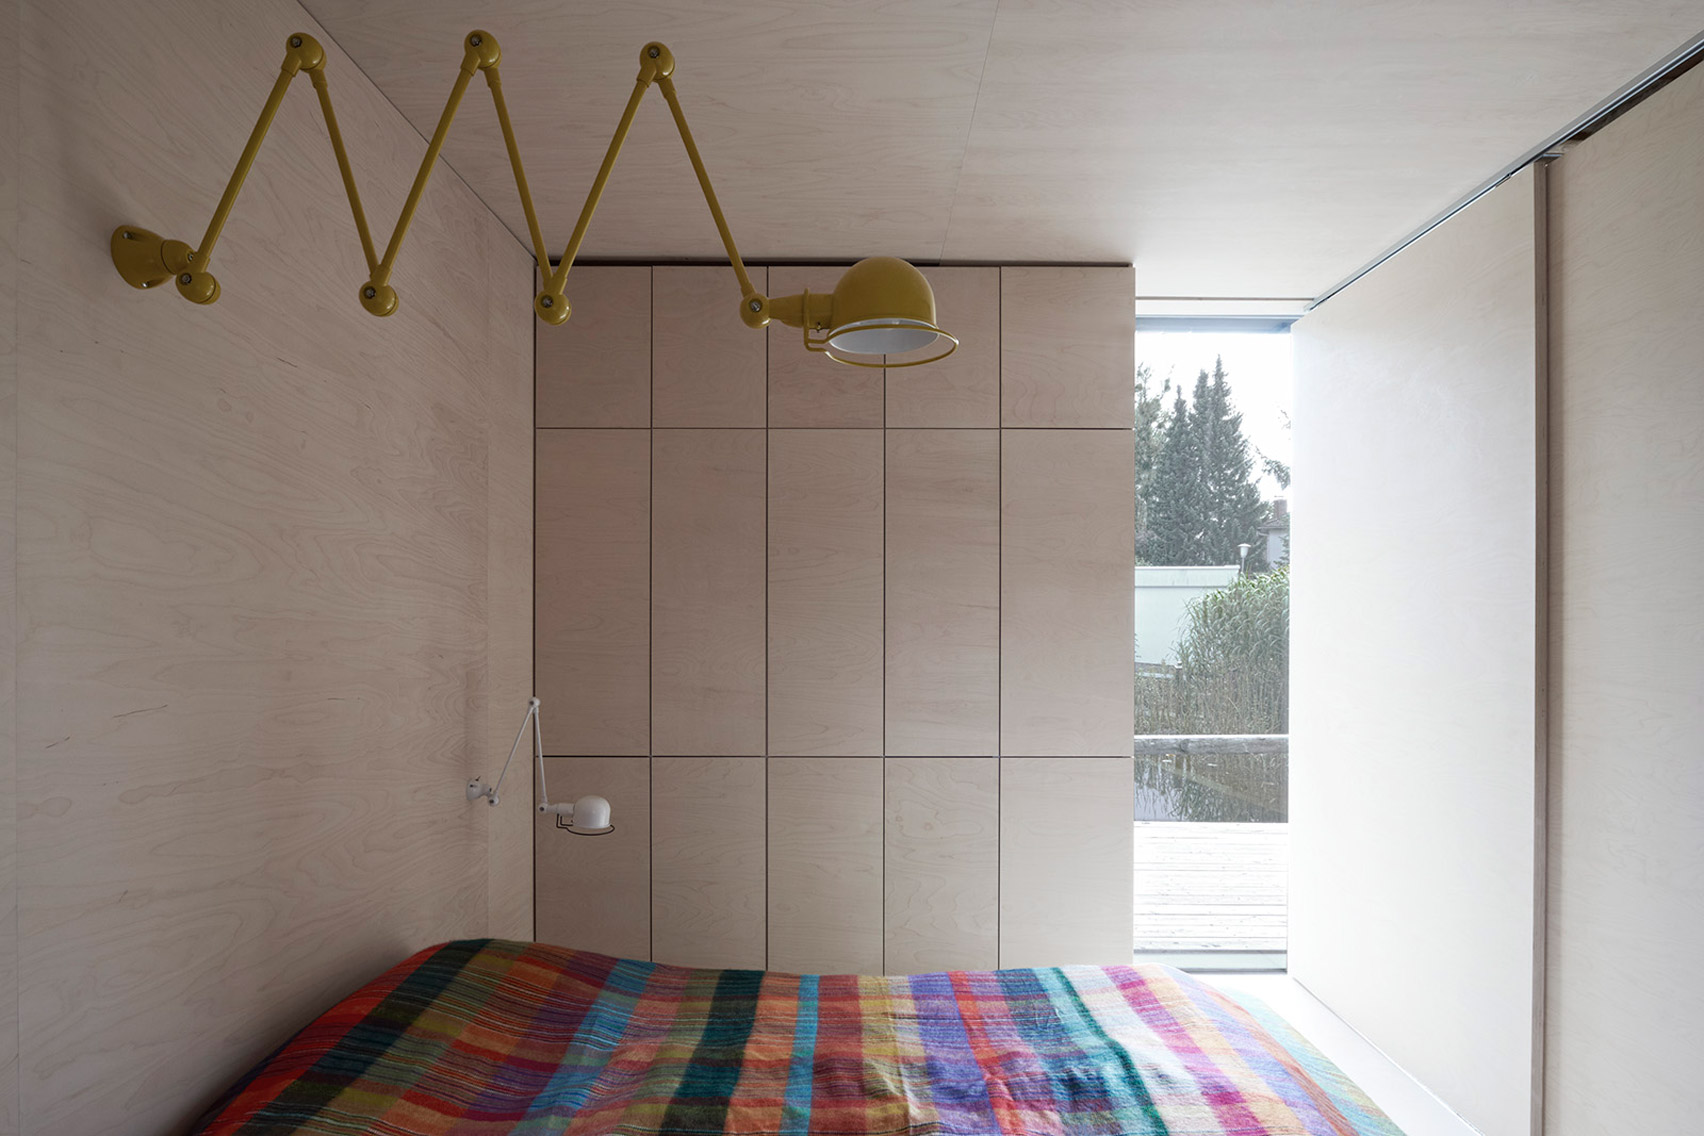 Bedroom of House at the Pond, Austria, by Hammerschmid Pachl Seebacher Architekten